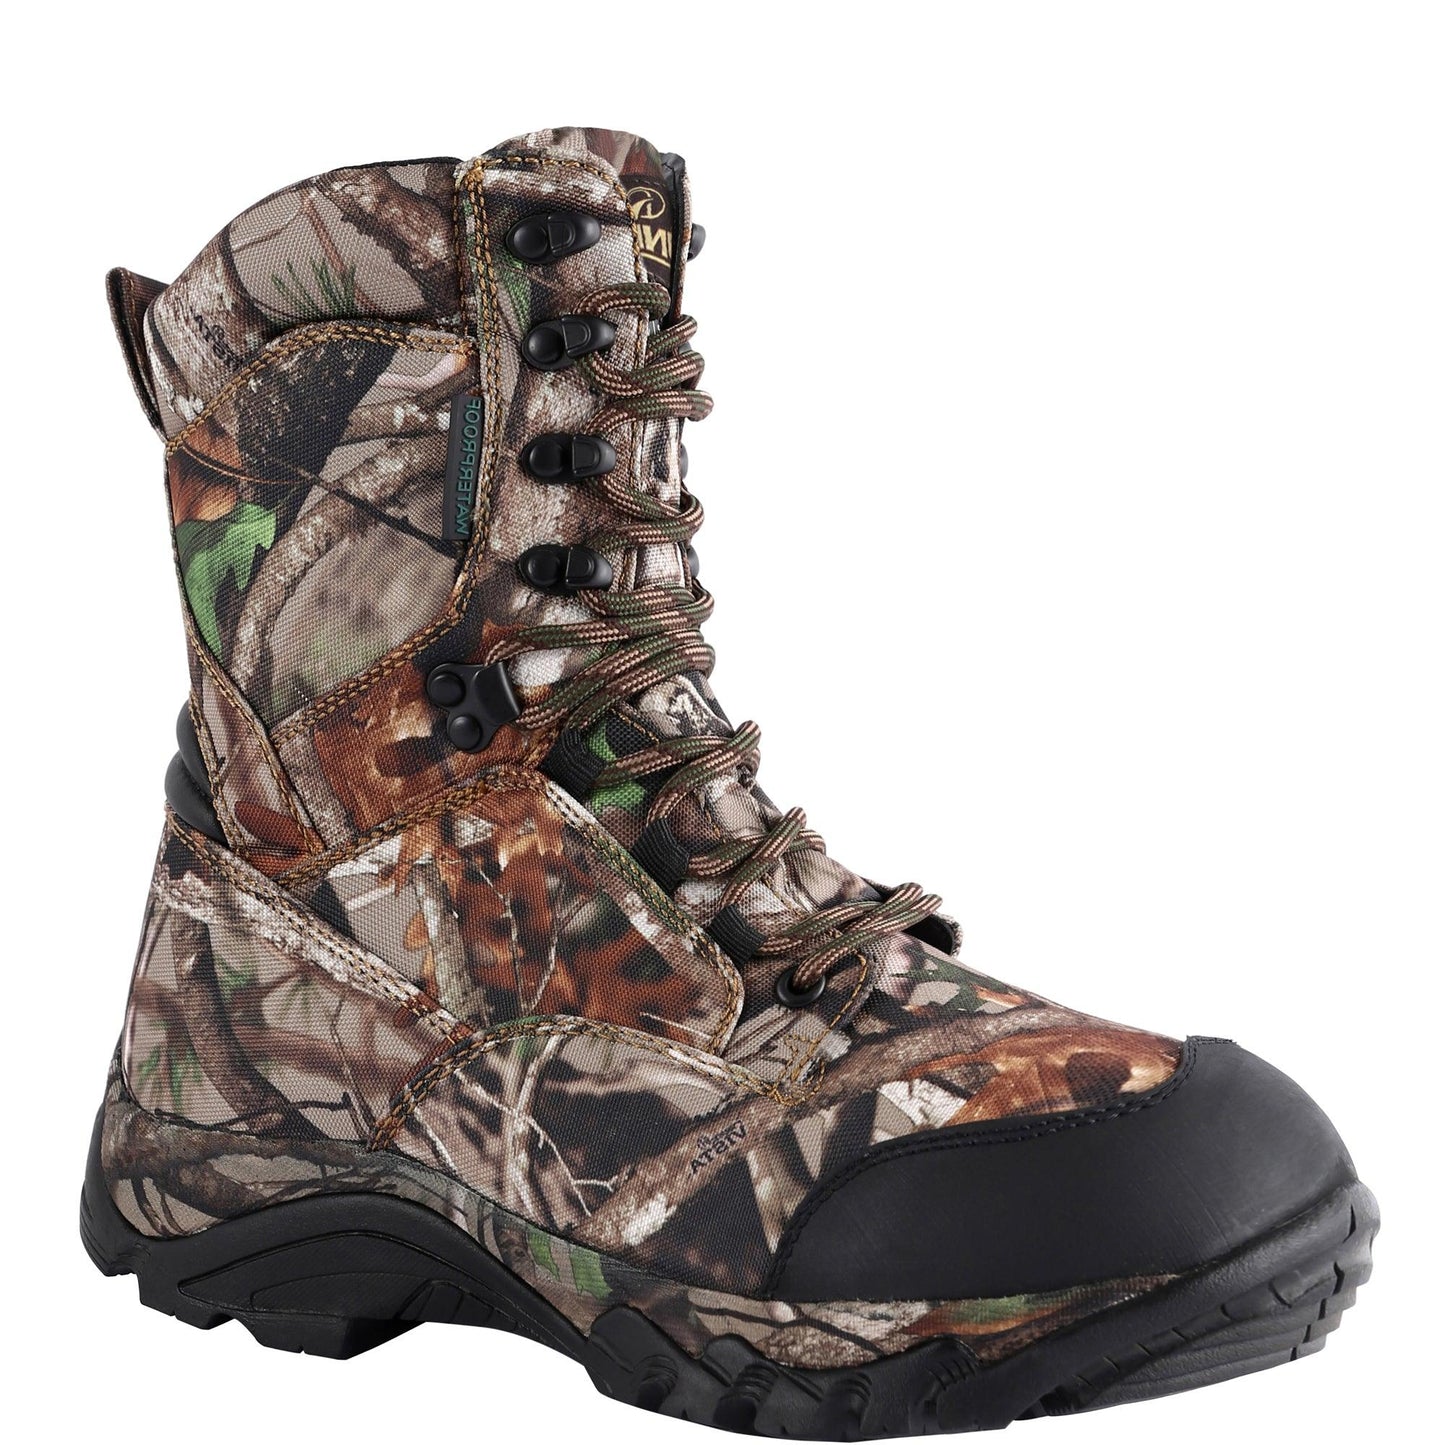 RUNFUN Men's 8-inch Winter Waterproof Leather Insulated NEXT Camo Boot RF2301-8CG - Runfun Footwear